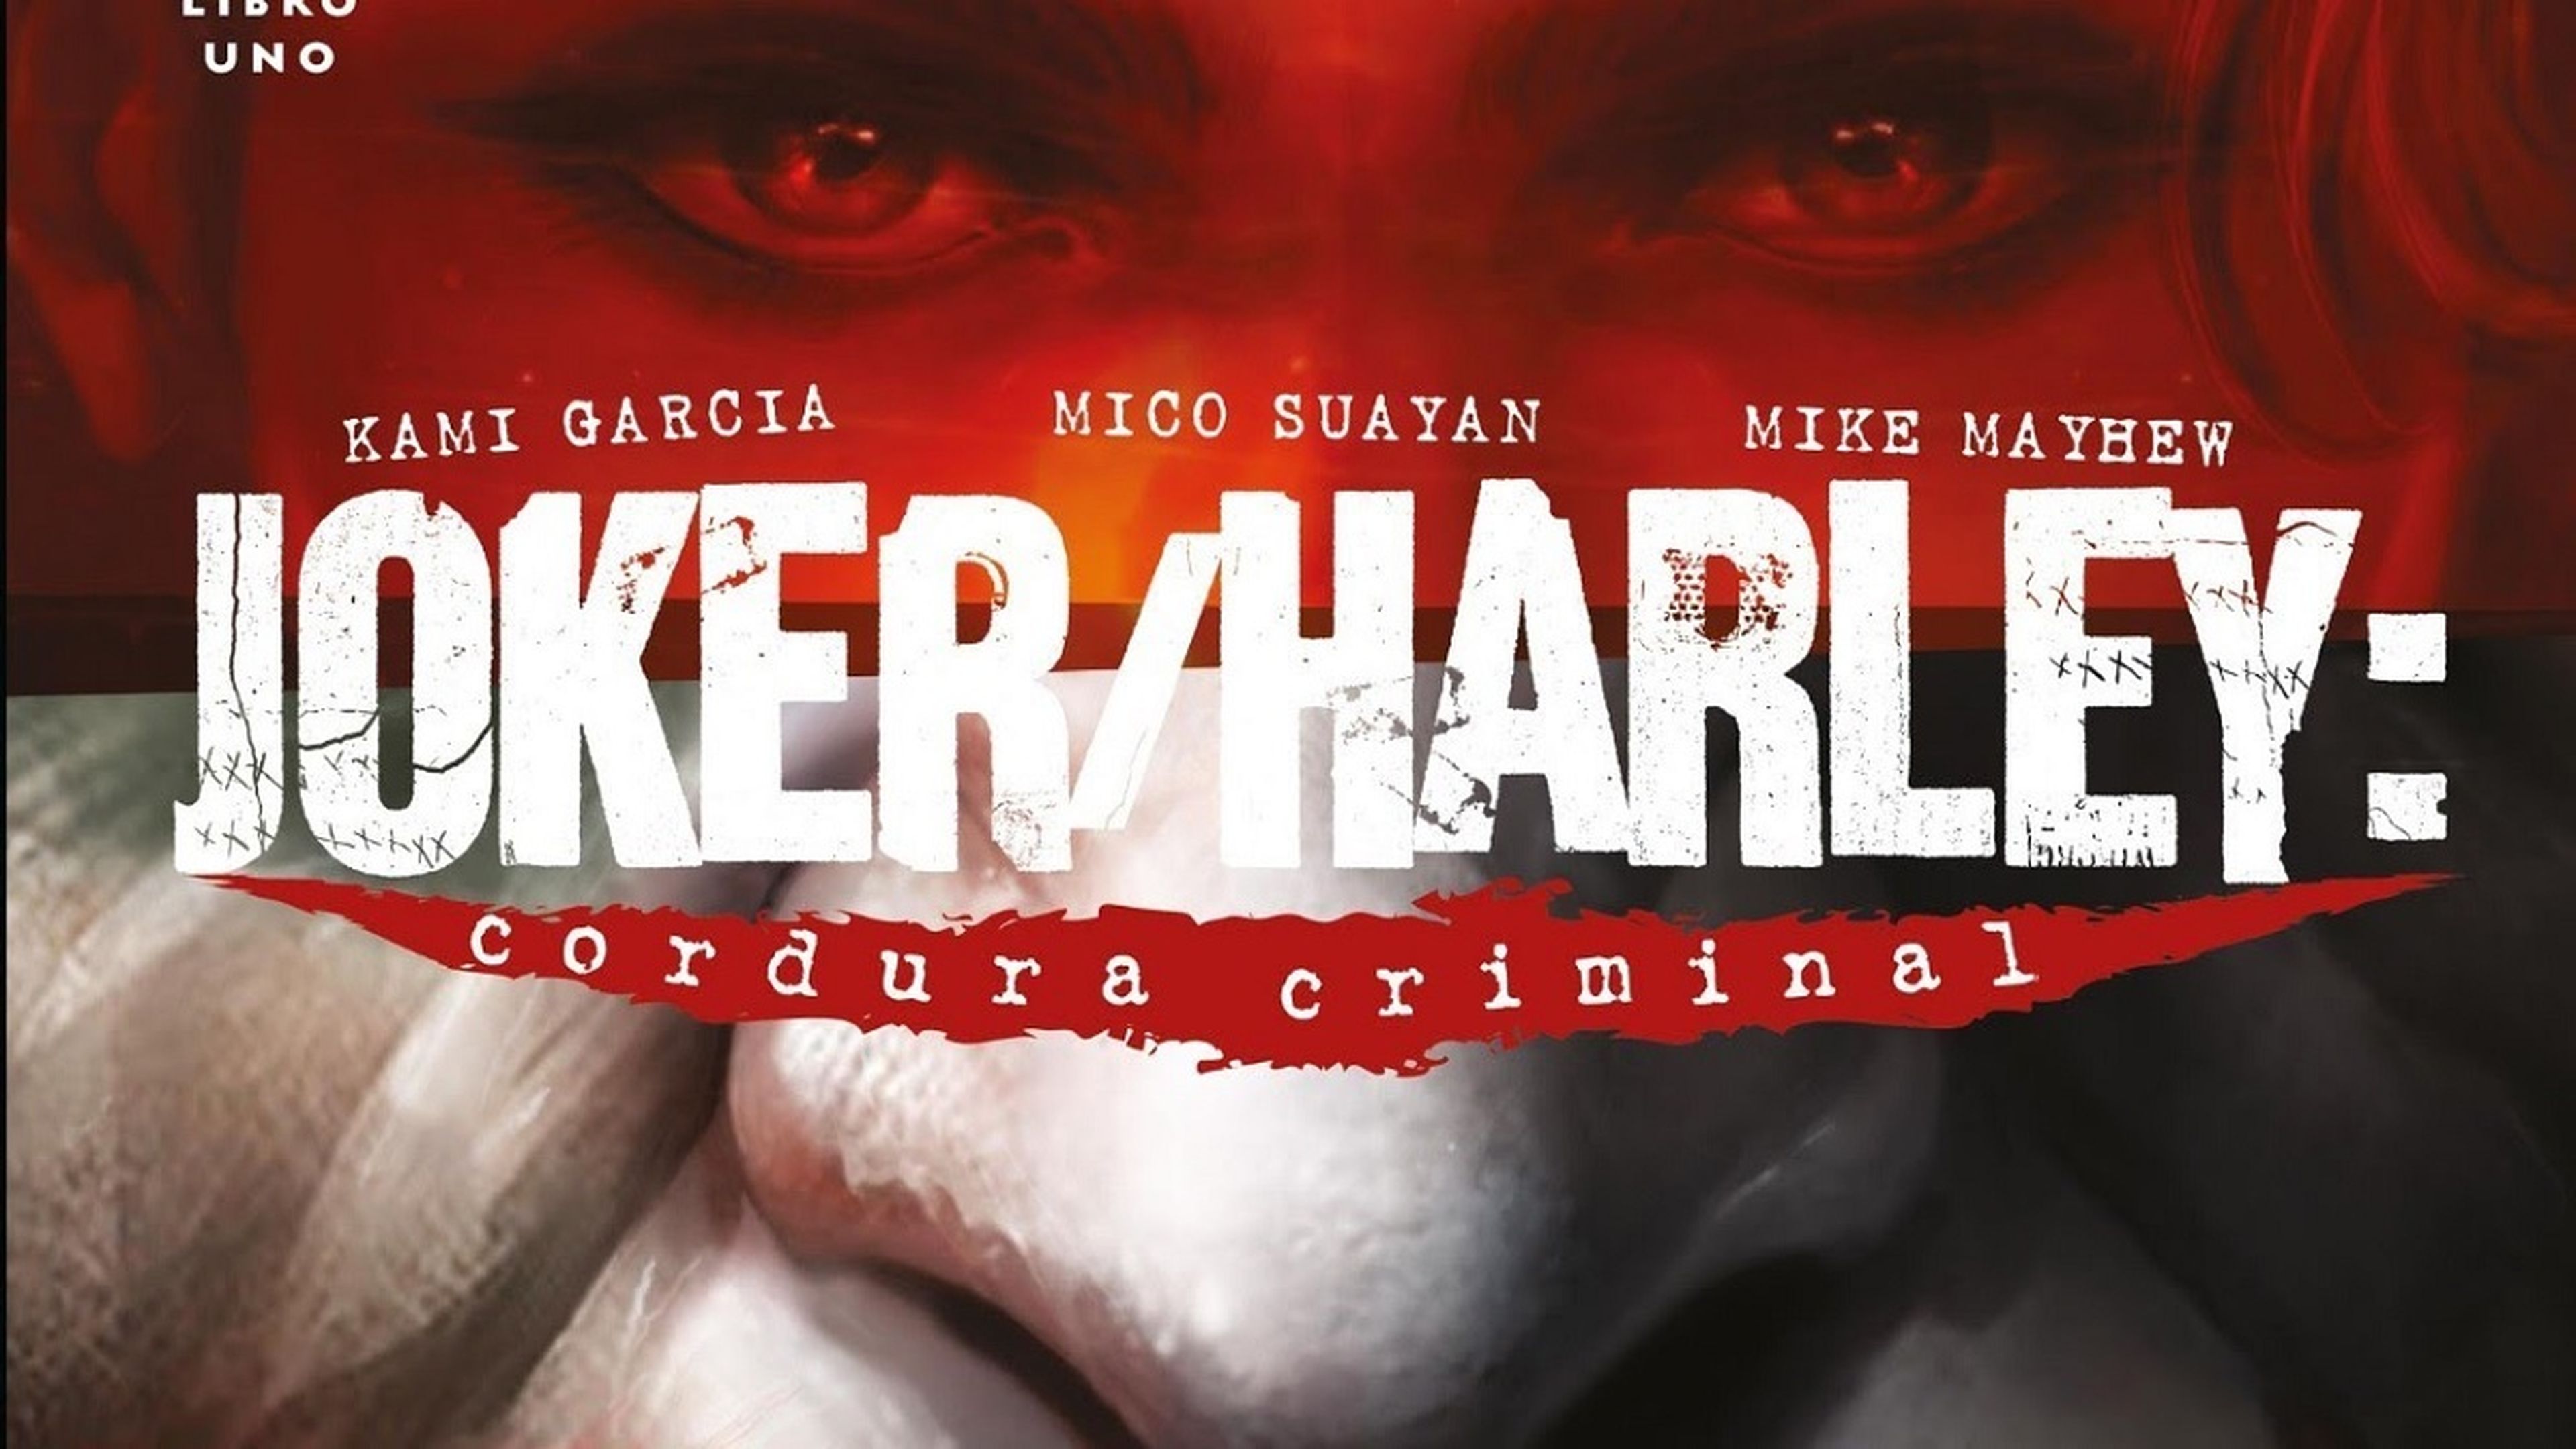 Joker/Harley: Cordura criminal (cómics)